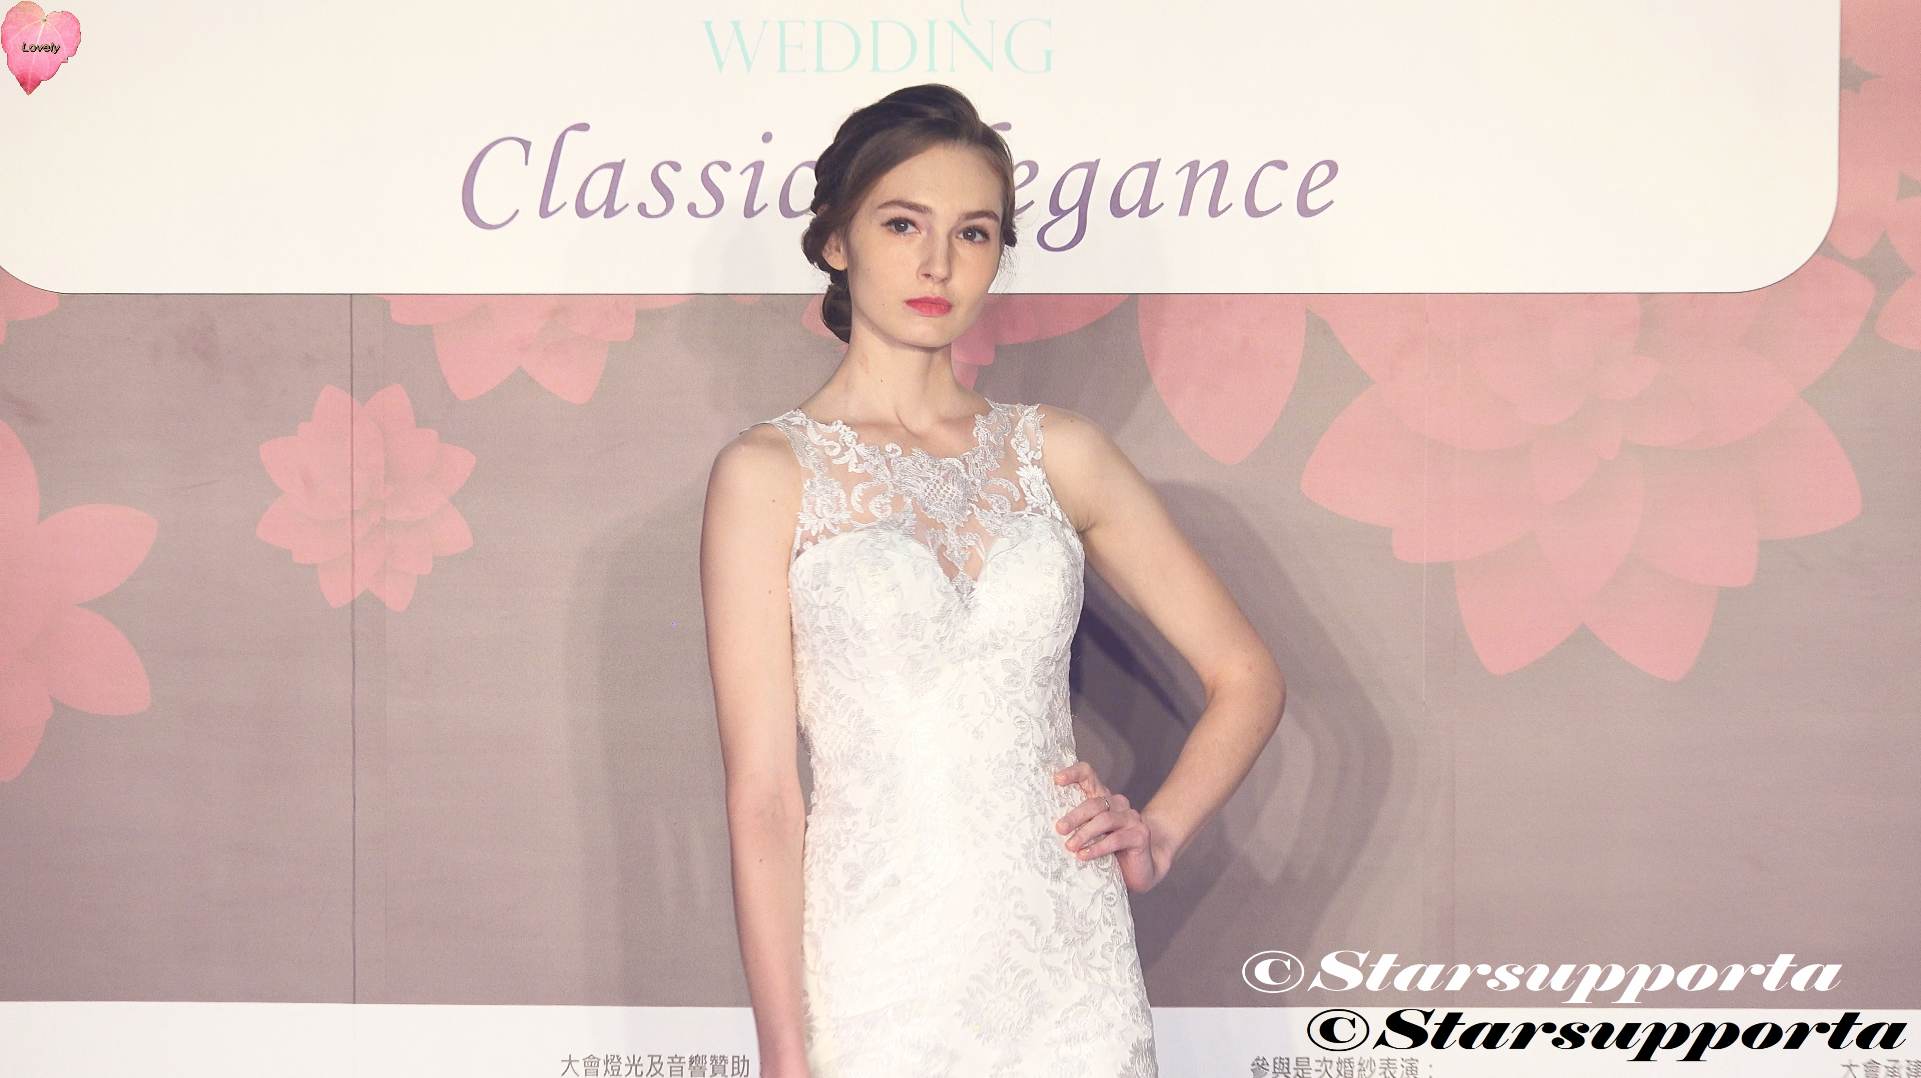 20200711 香港婚紗展 - Bride Sweet Wedding: Classic Elegance Wedding Catwalk @ 香港會議展覽中心